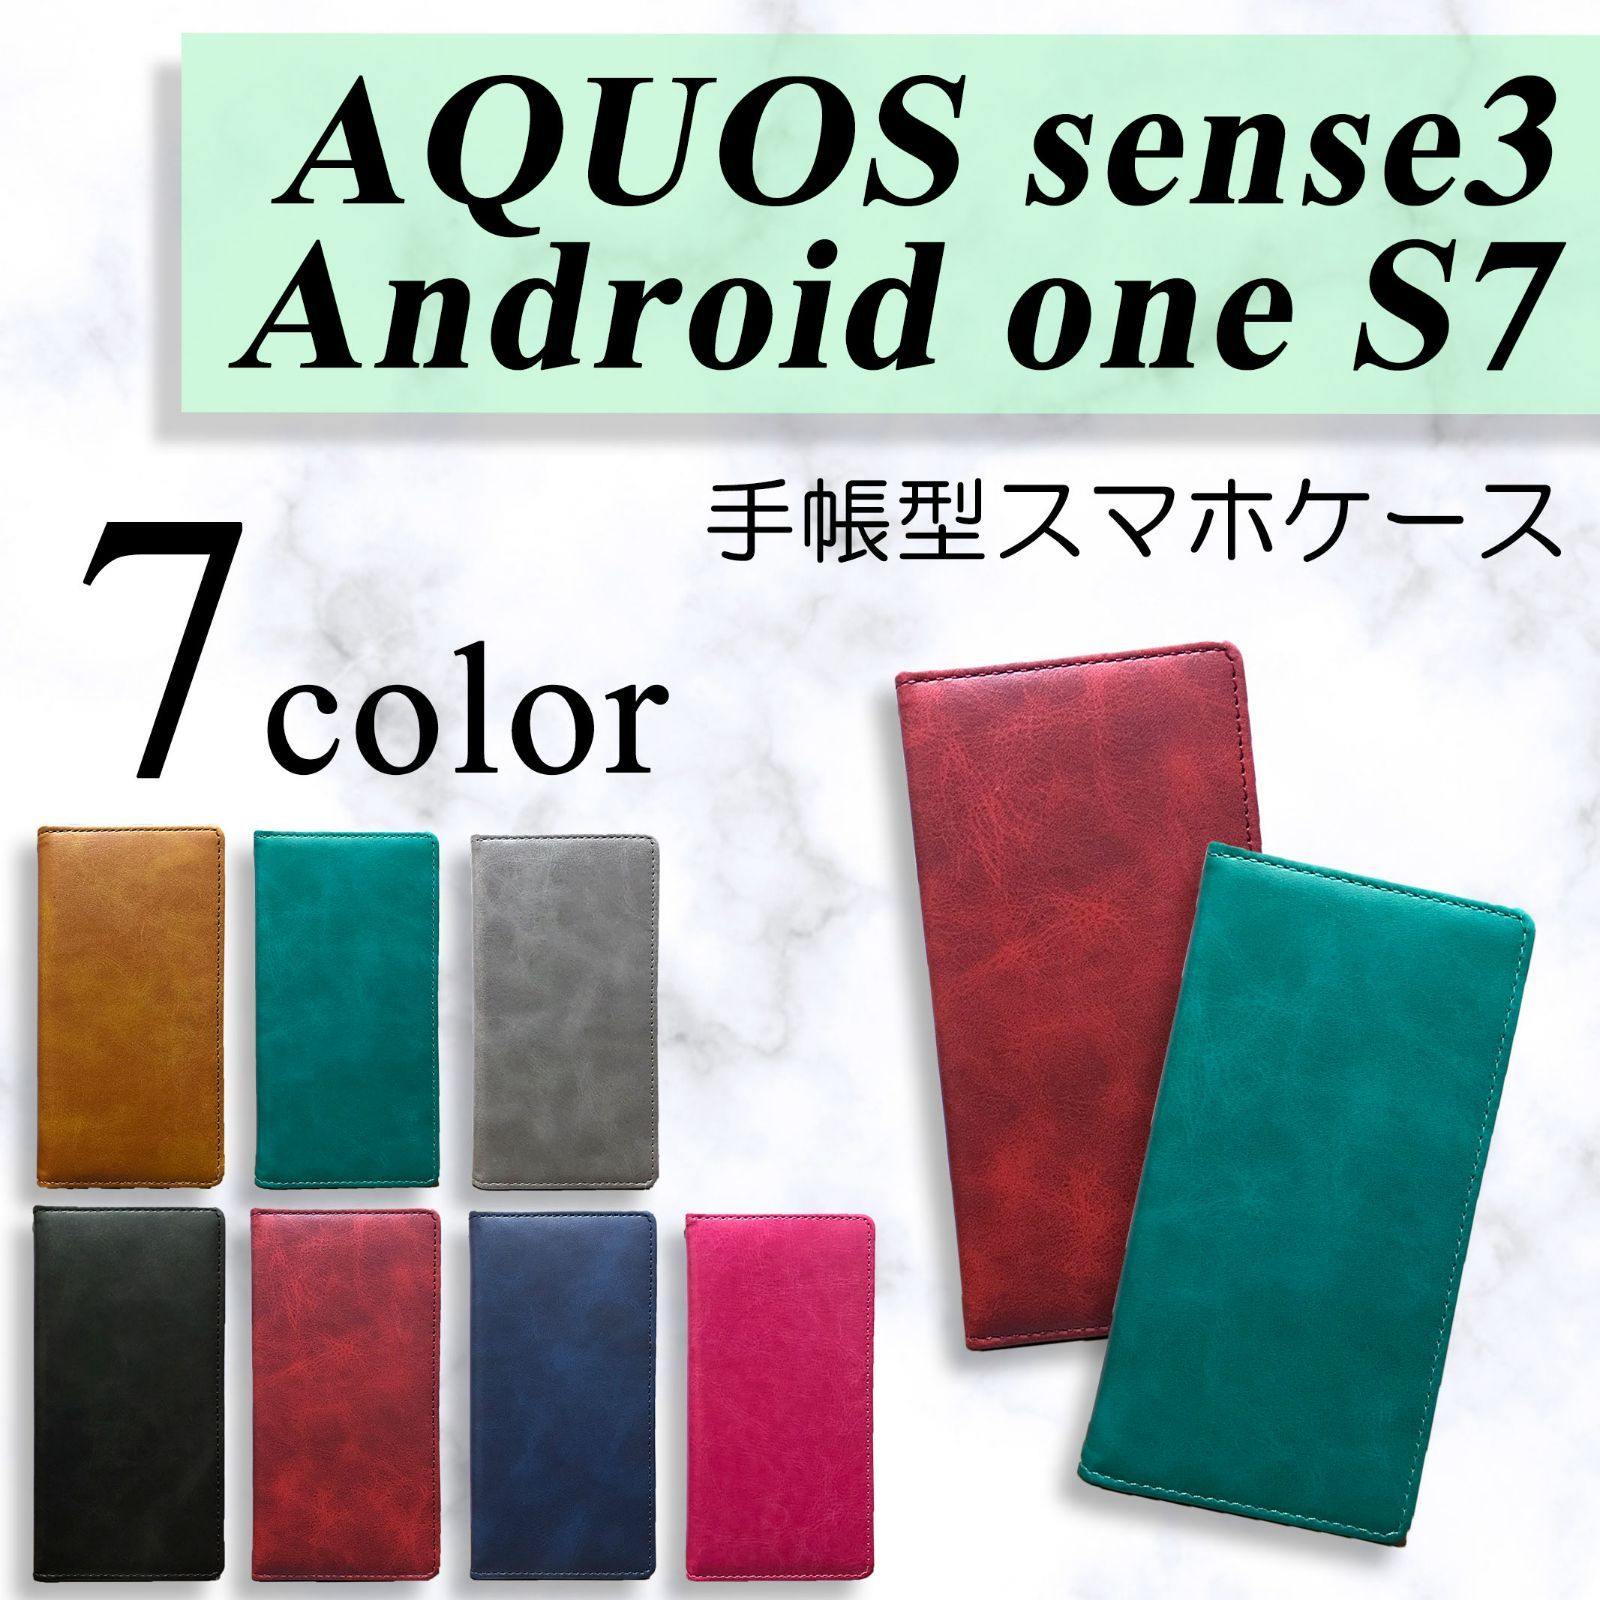 sense3 レザー シンプル 手帳型 スマホケース カバー アクオス センス3 RELUCENT メルカリ